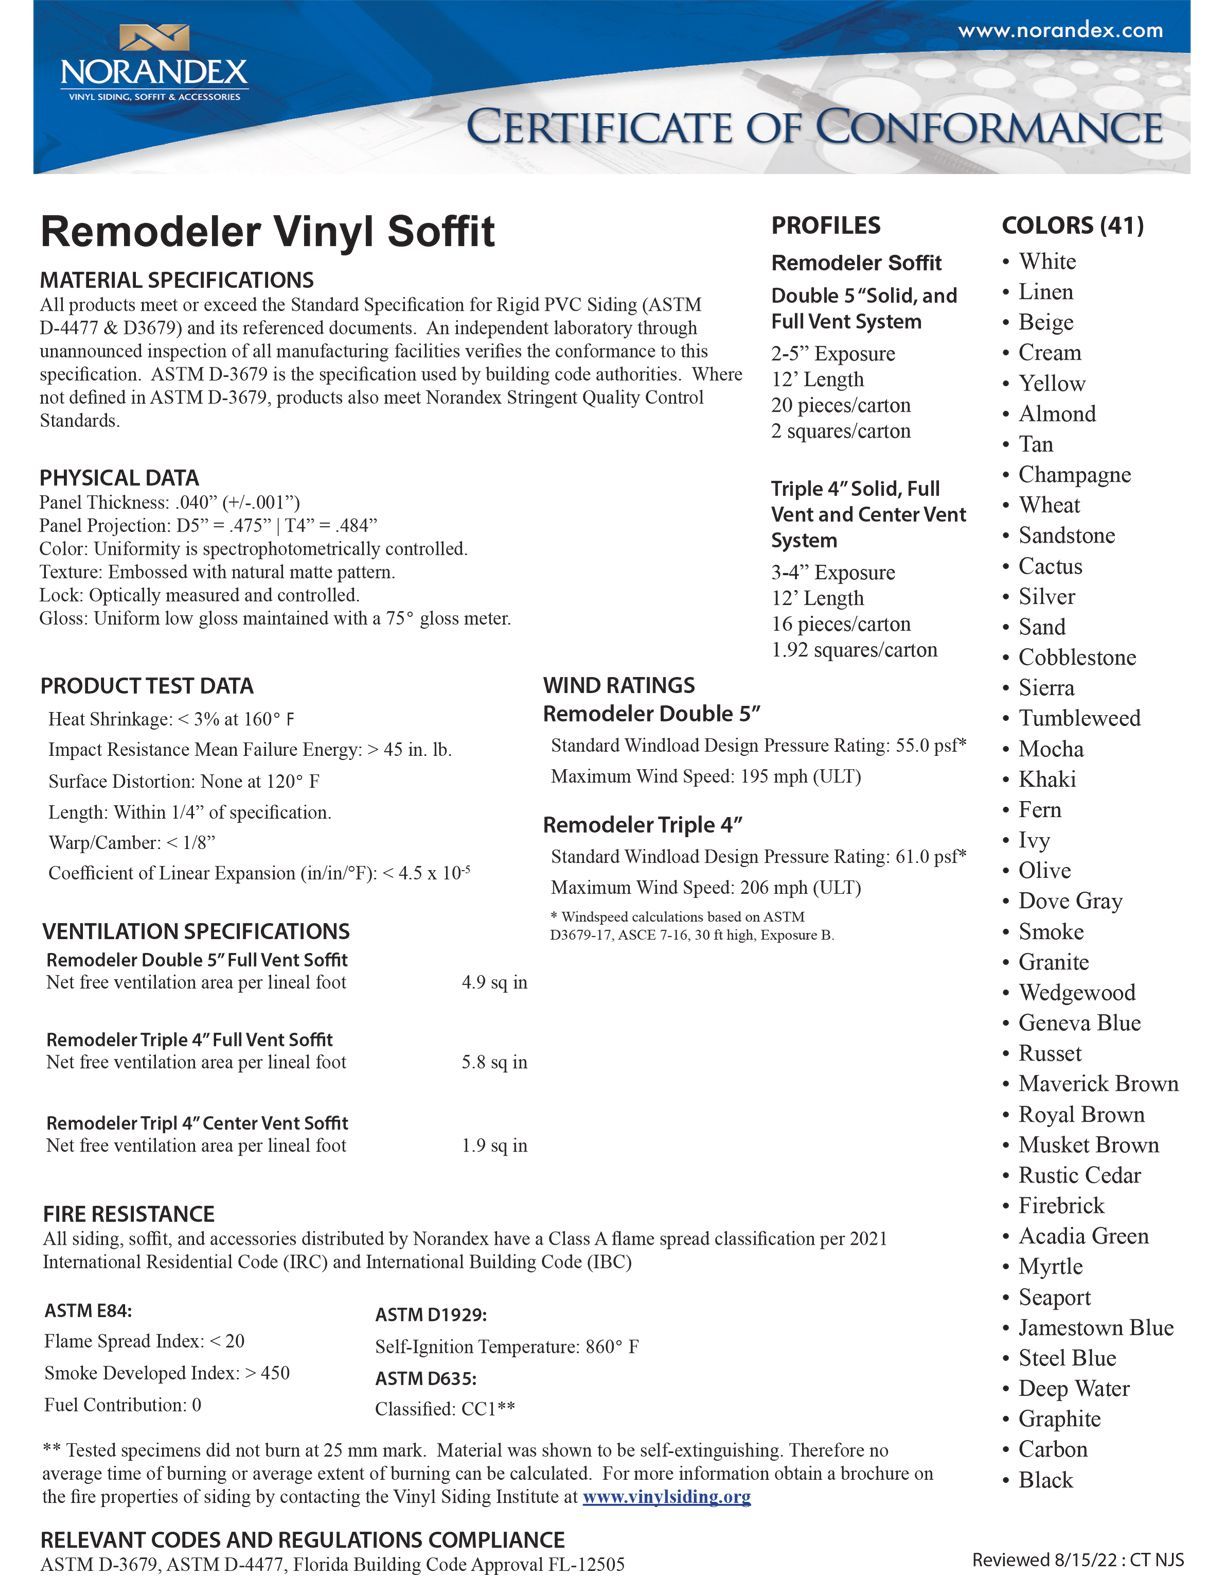 Norandex Remodeler Vinyl Soffit Brochure